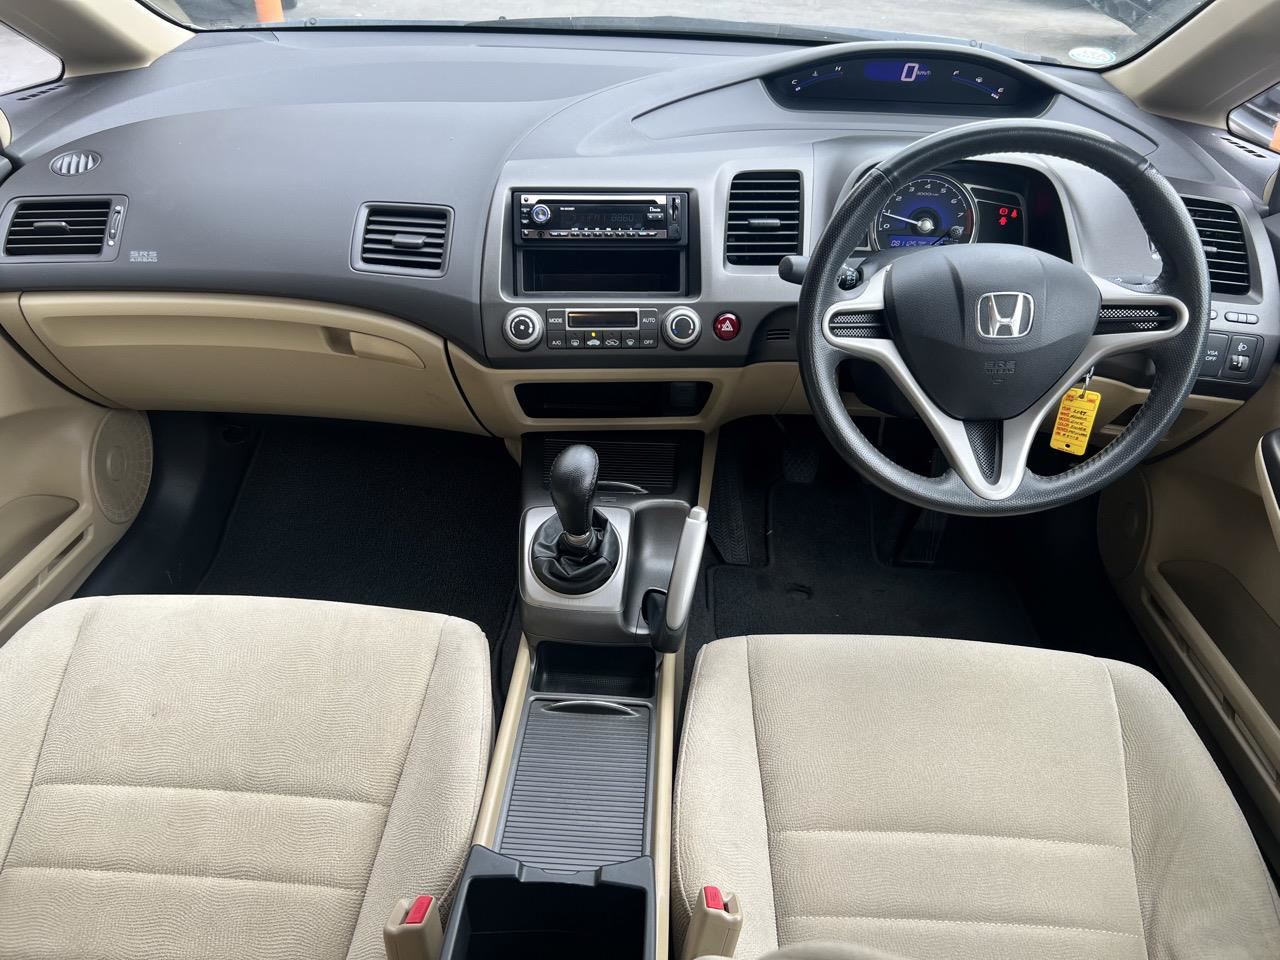 2017 Honda Civic steering wheel & gear shift 